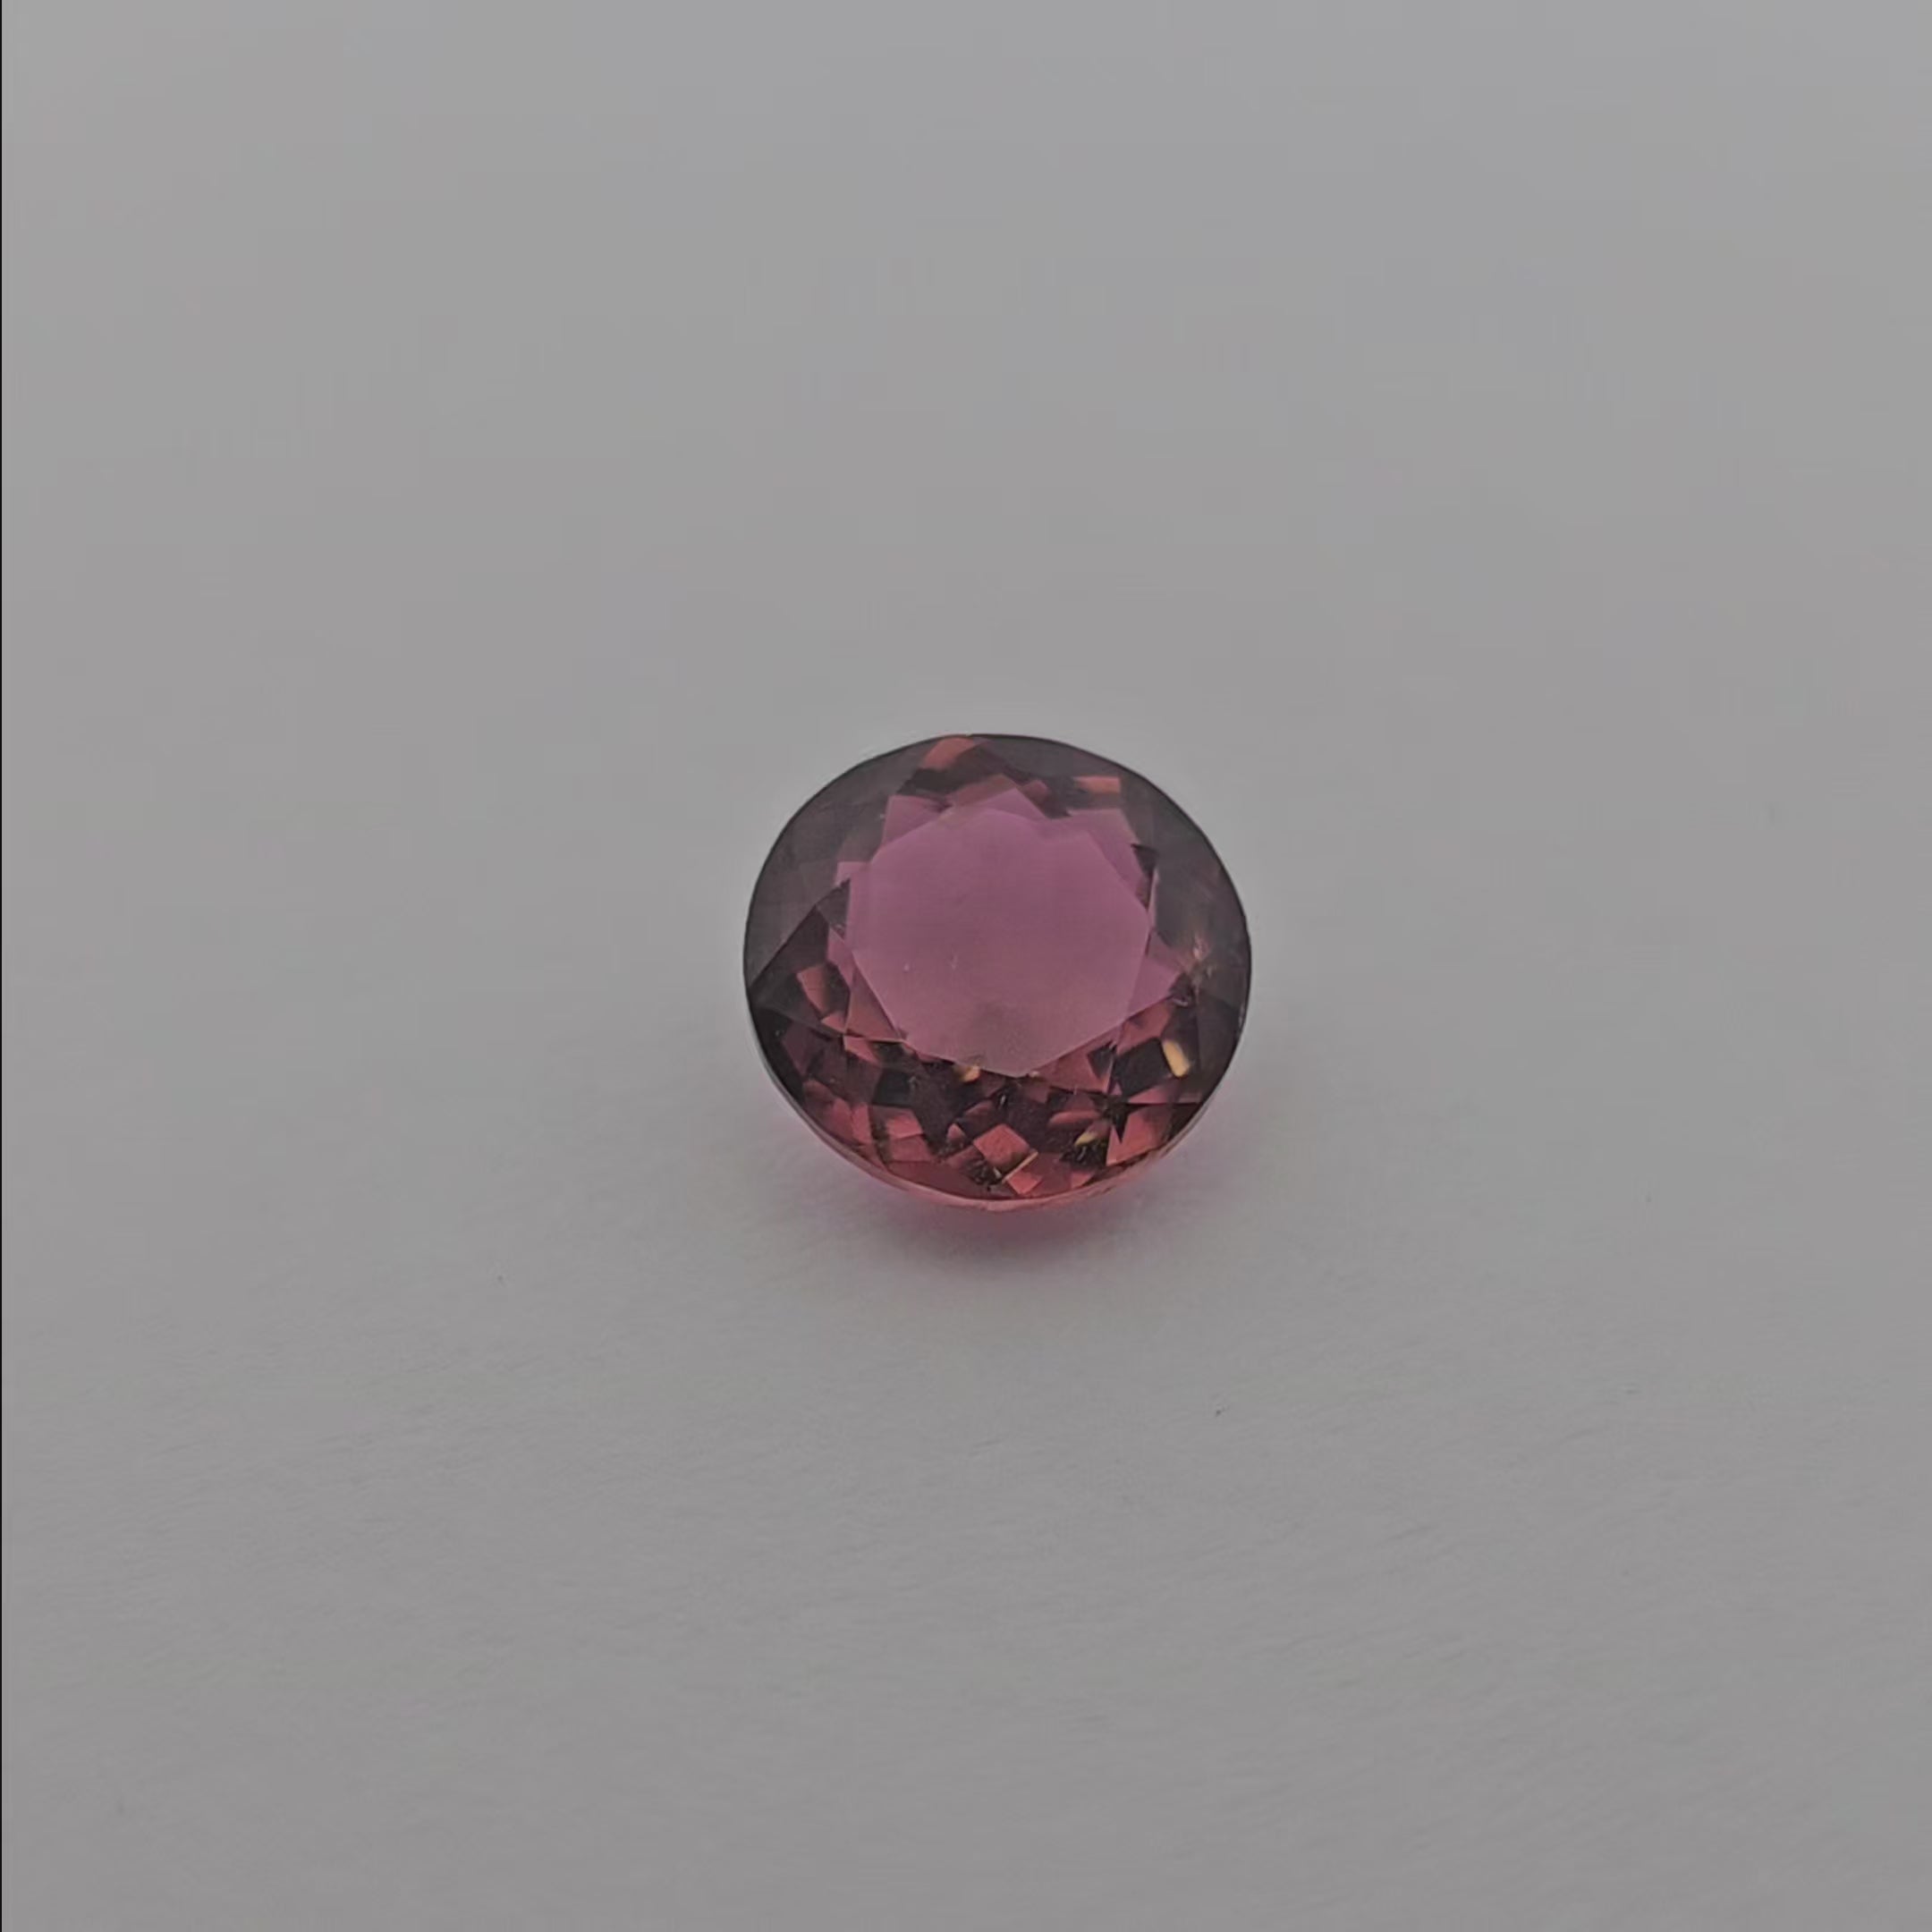 loose Natural Pink Tourmaline Stone 2.9 Carats Round Cut (9.1  mm)